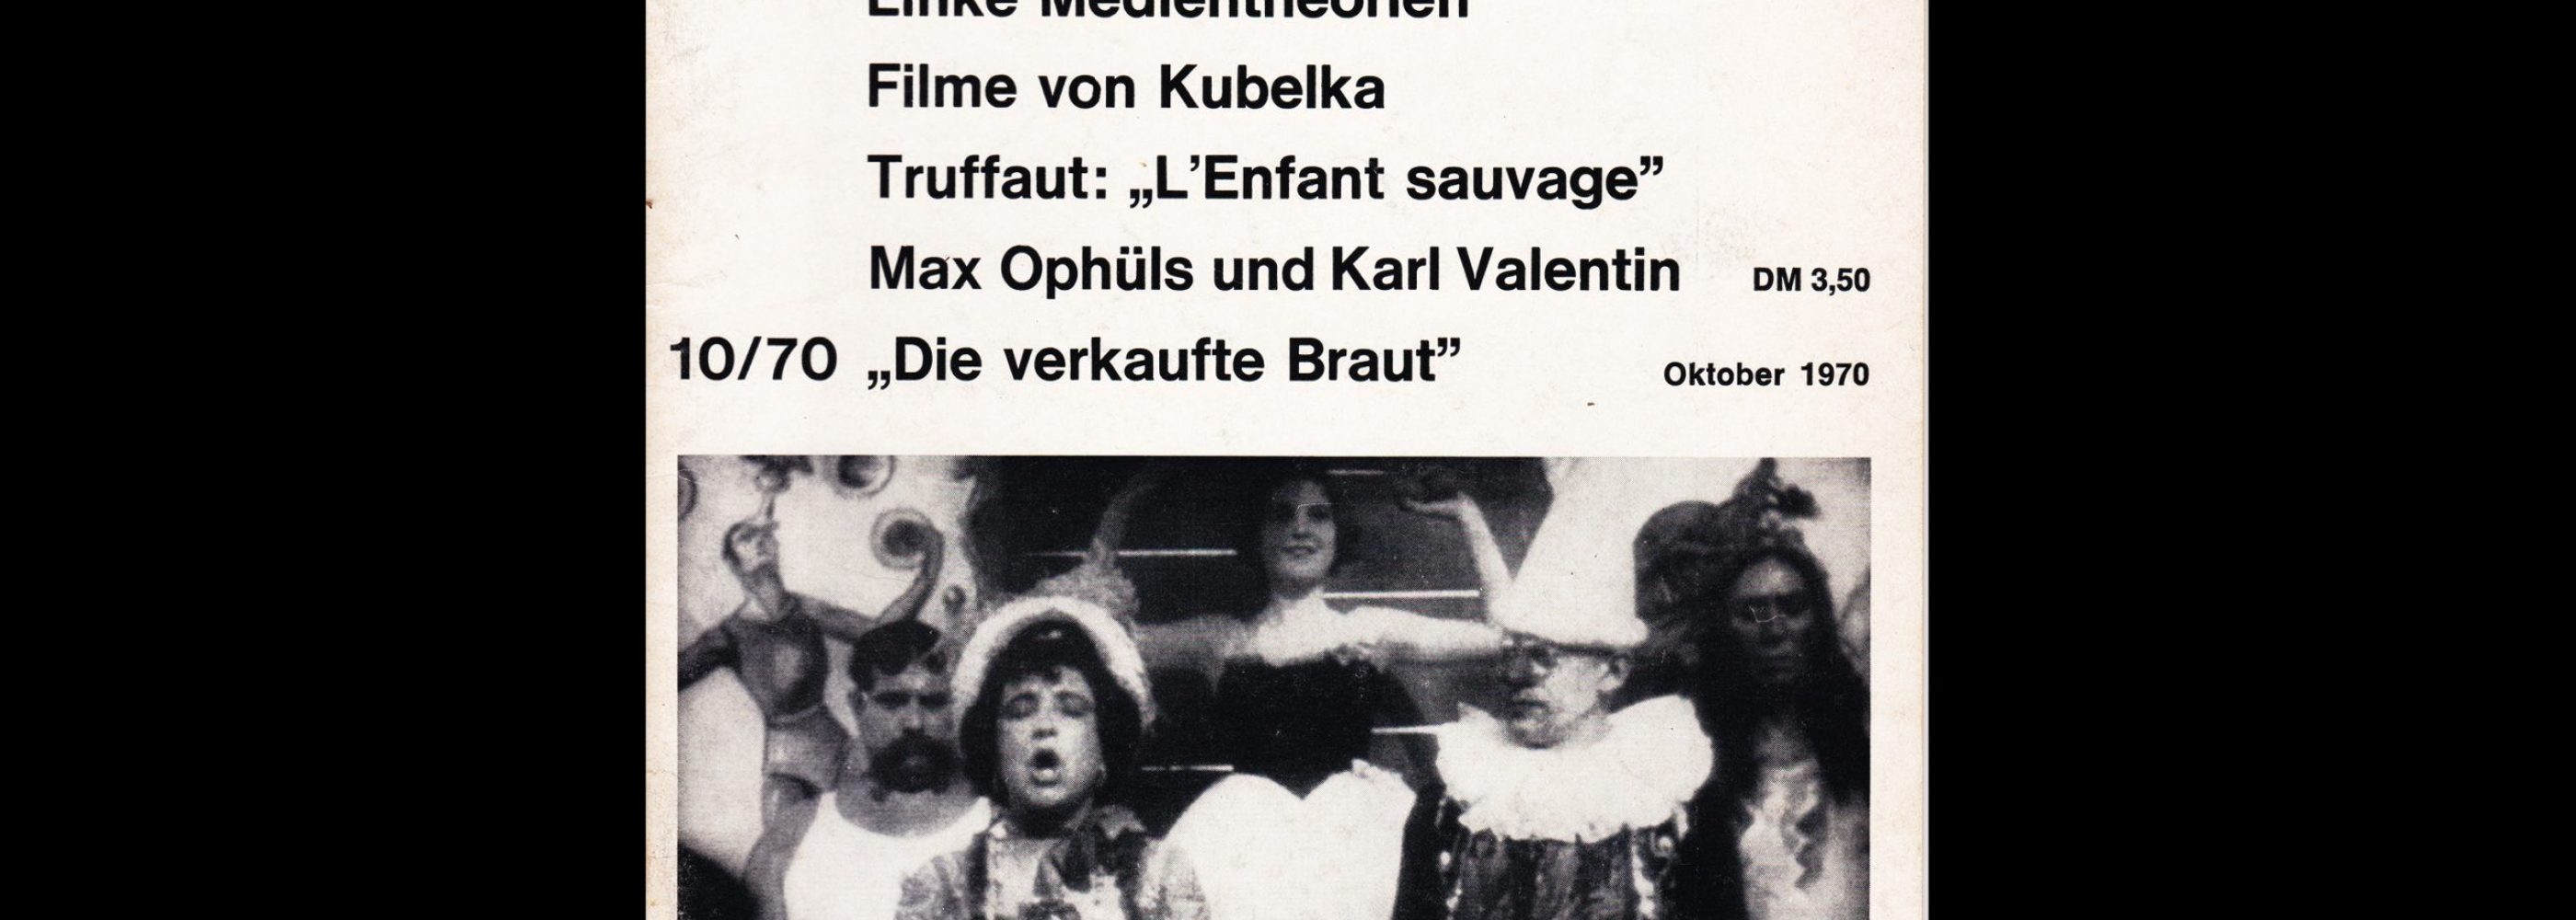 Filmkritik, October 1970